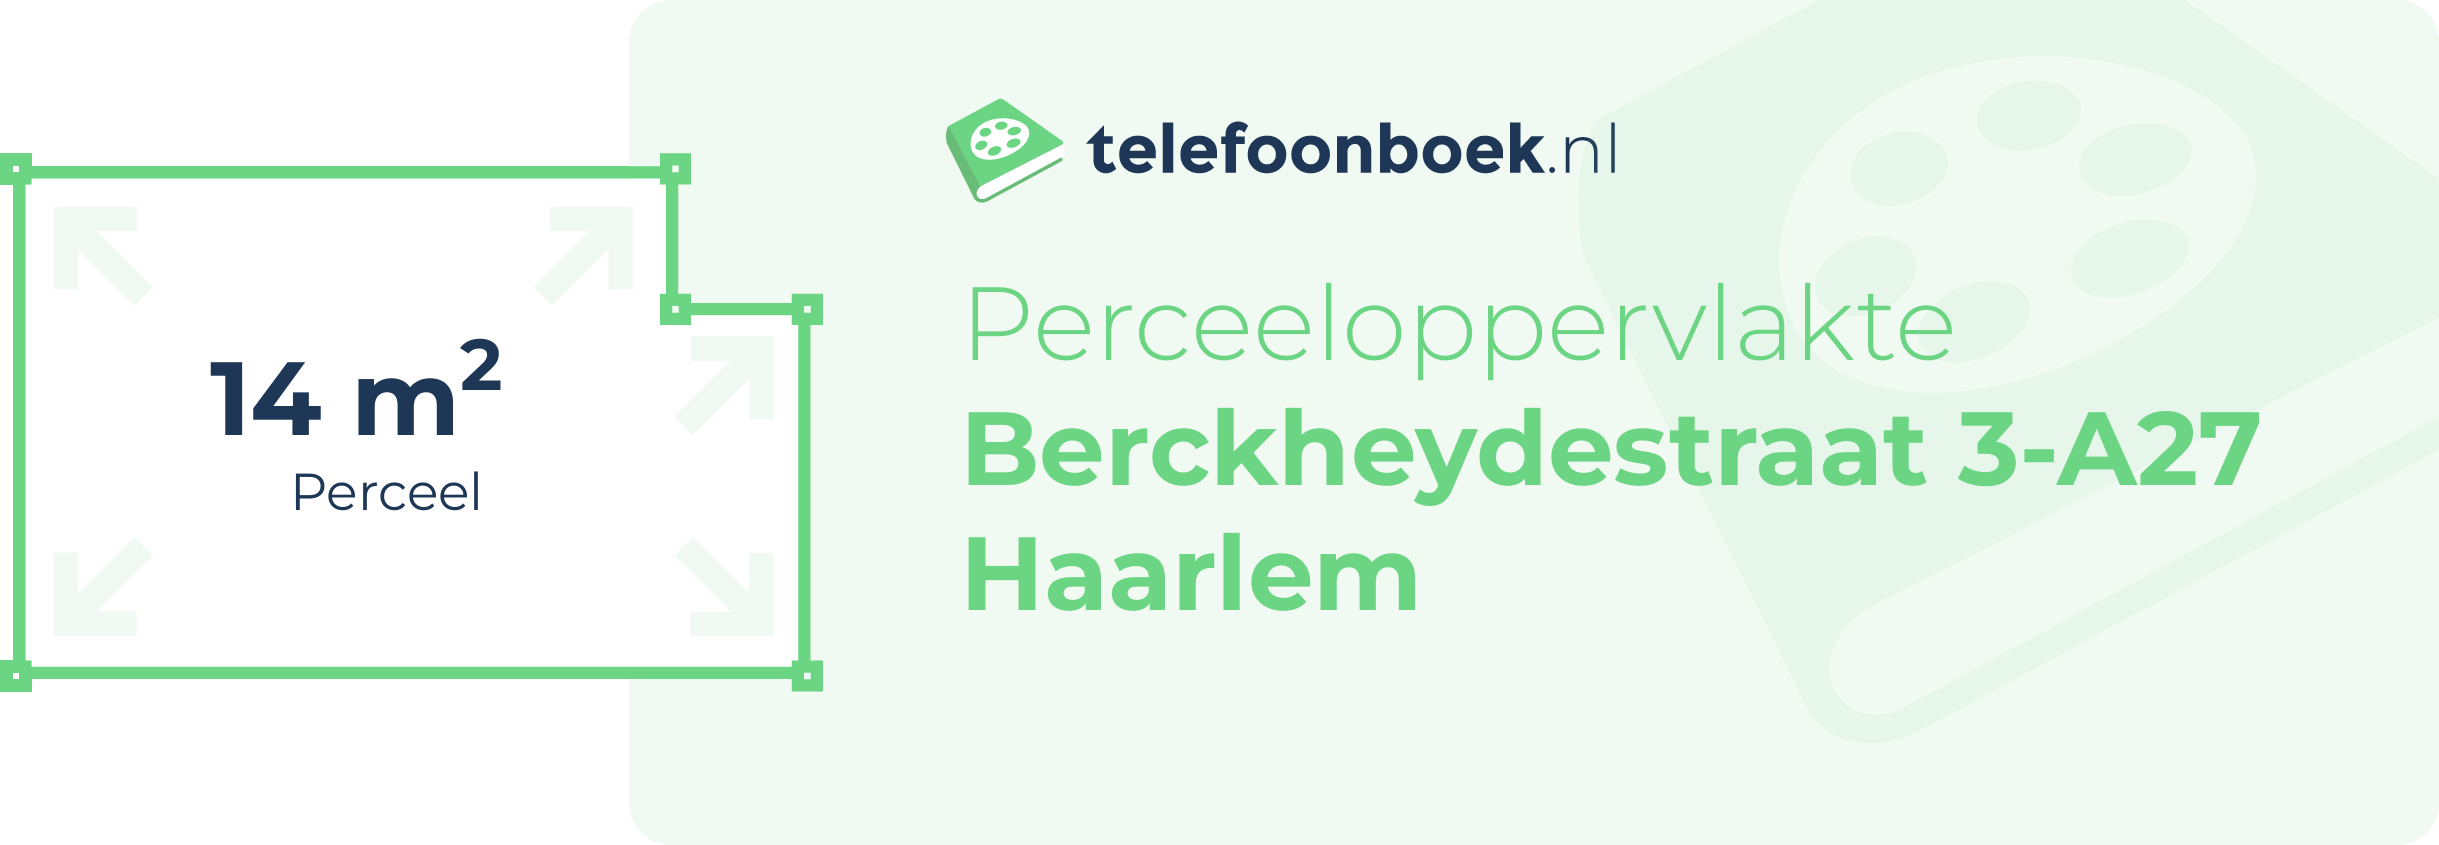 Perceeloppervlakte Berckheydestraat 3-A27 Haarlem